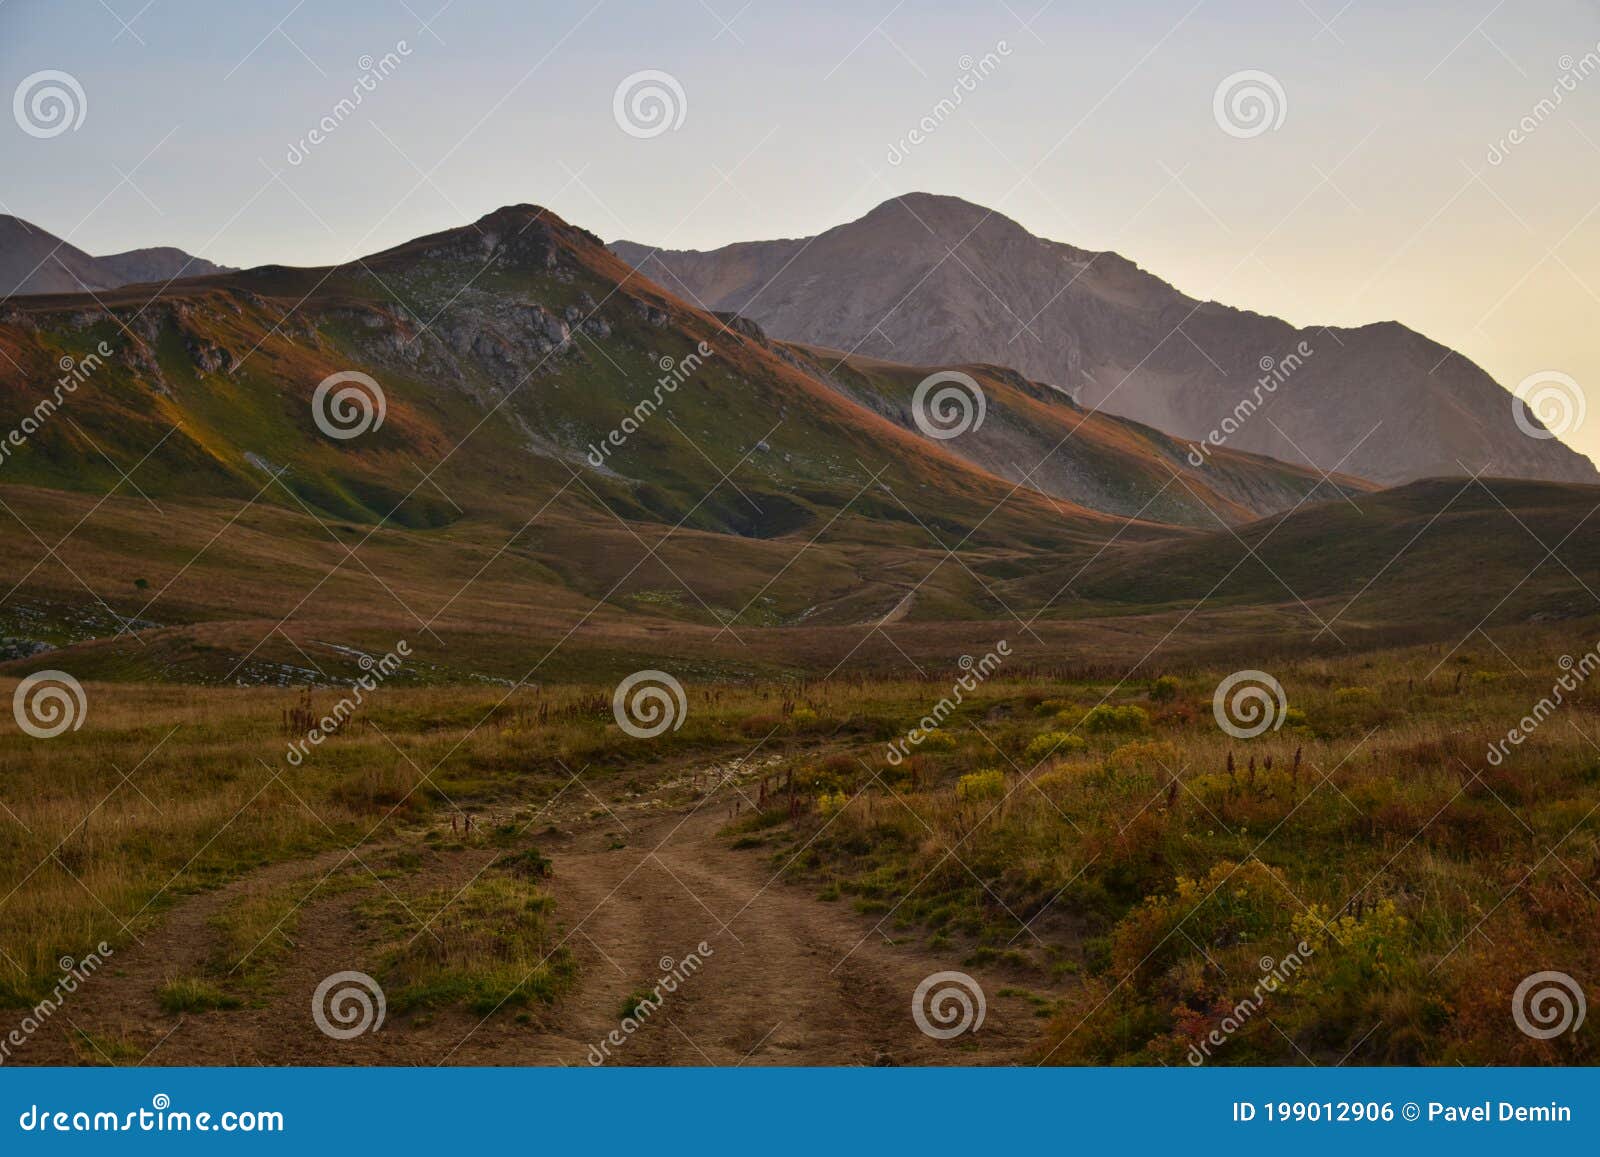 sundawn road to the mountains of the lagonaki plateau